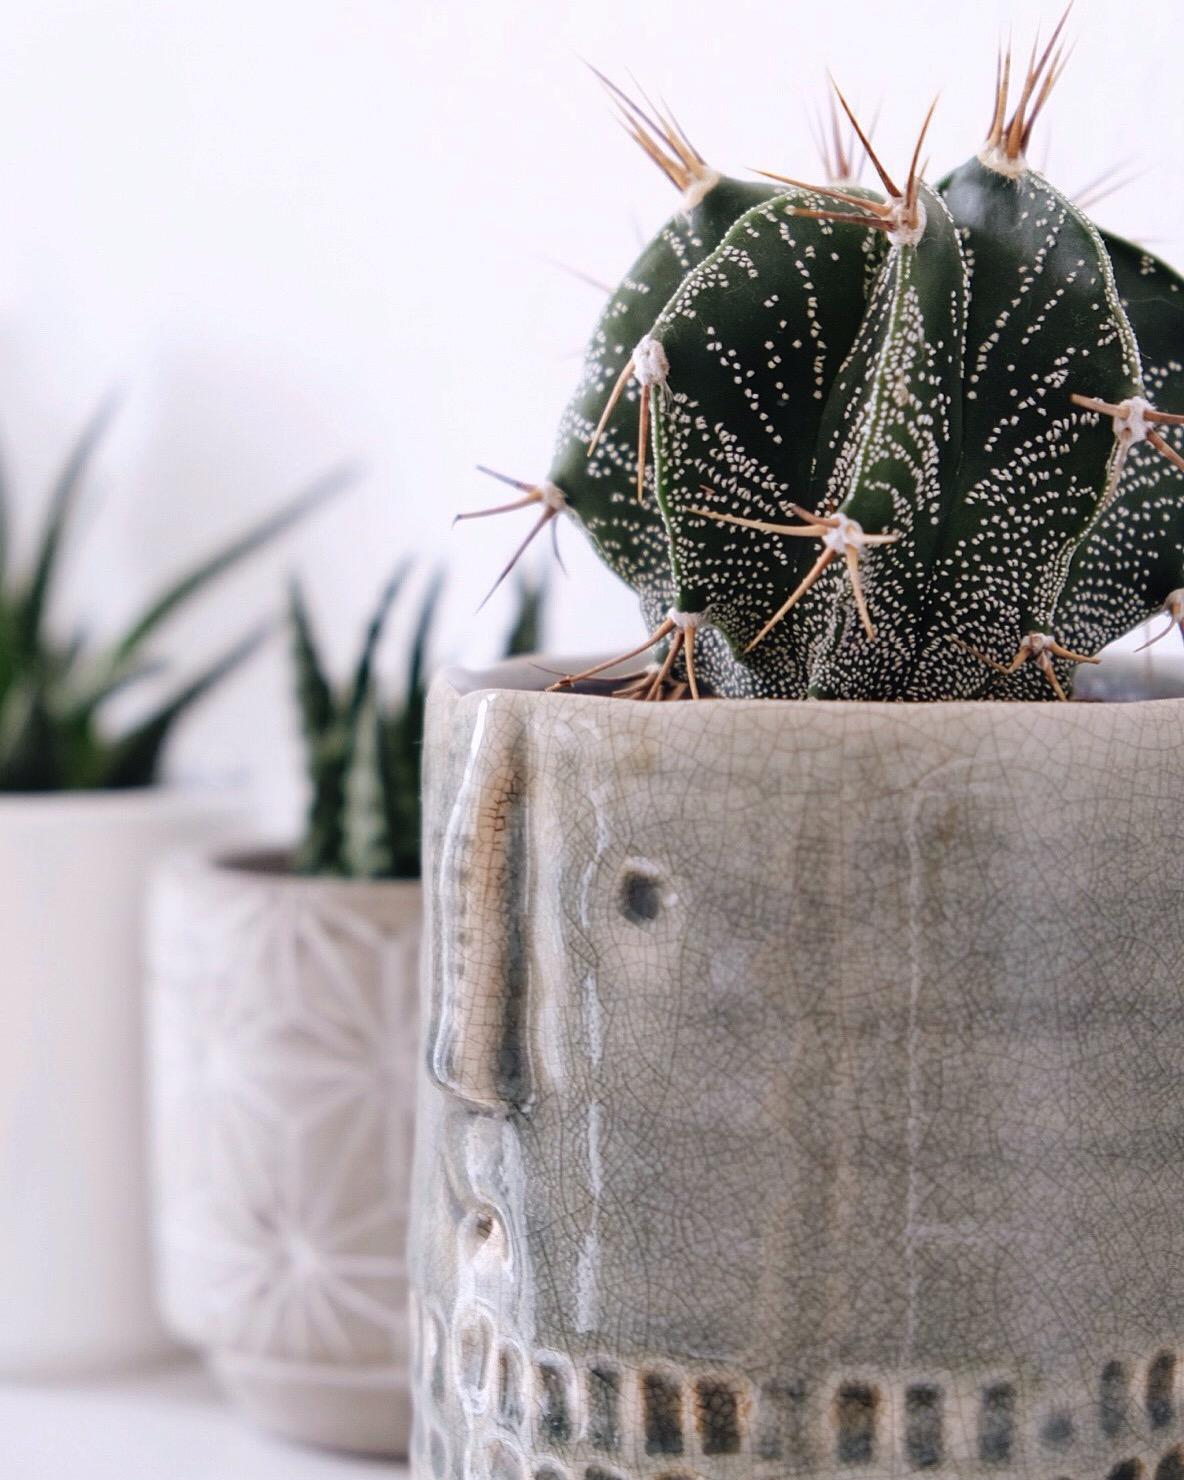 Cactuslover 🌵
#kaktus #sukkulenten #pflanzen #keramik #blumentopf #dekoration